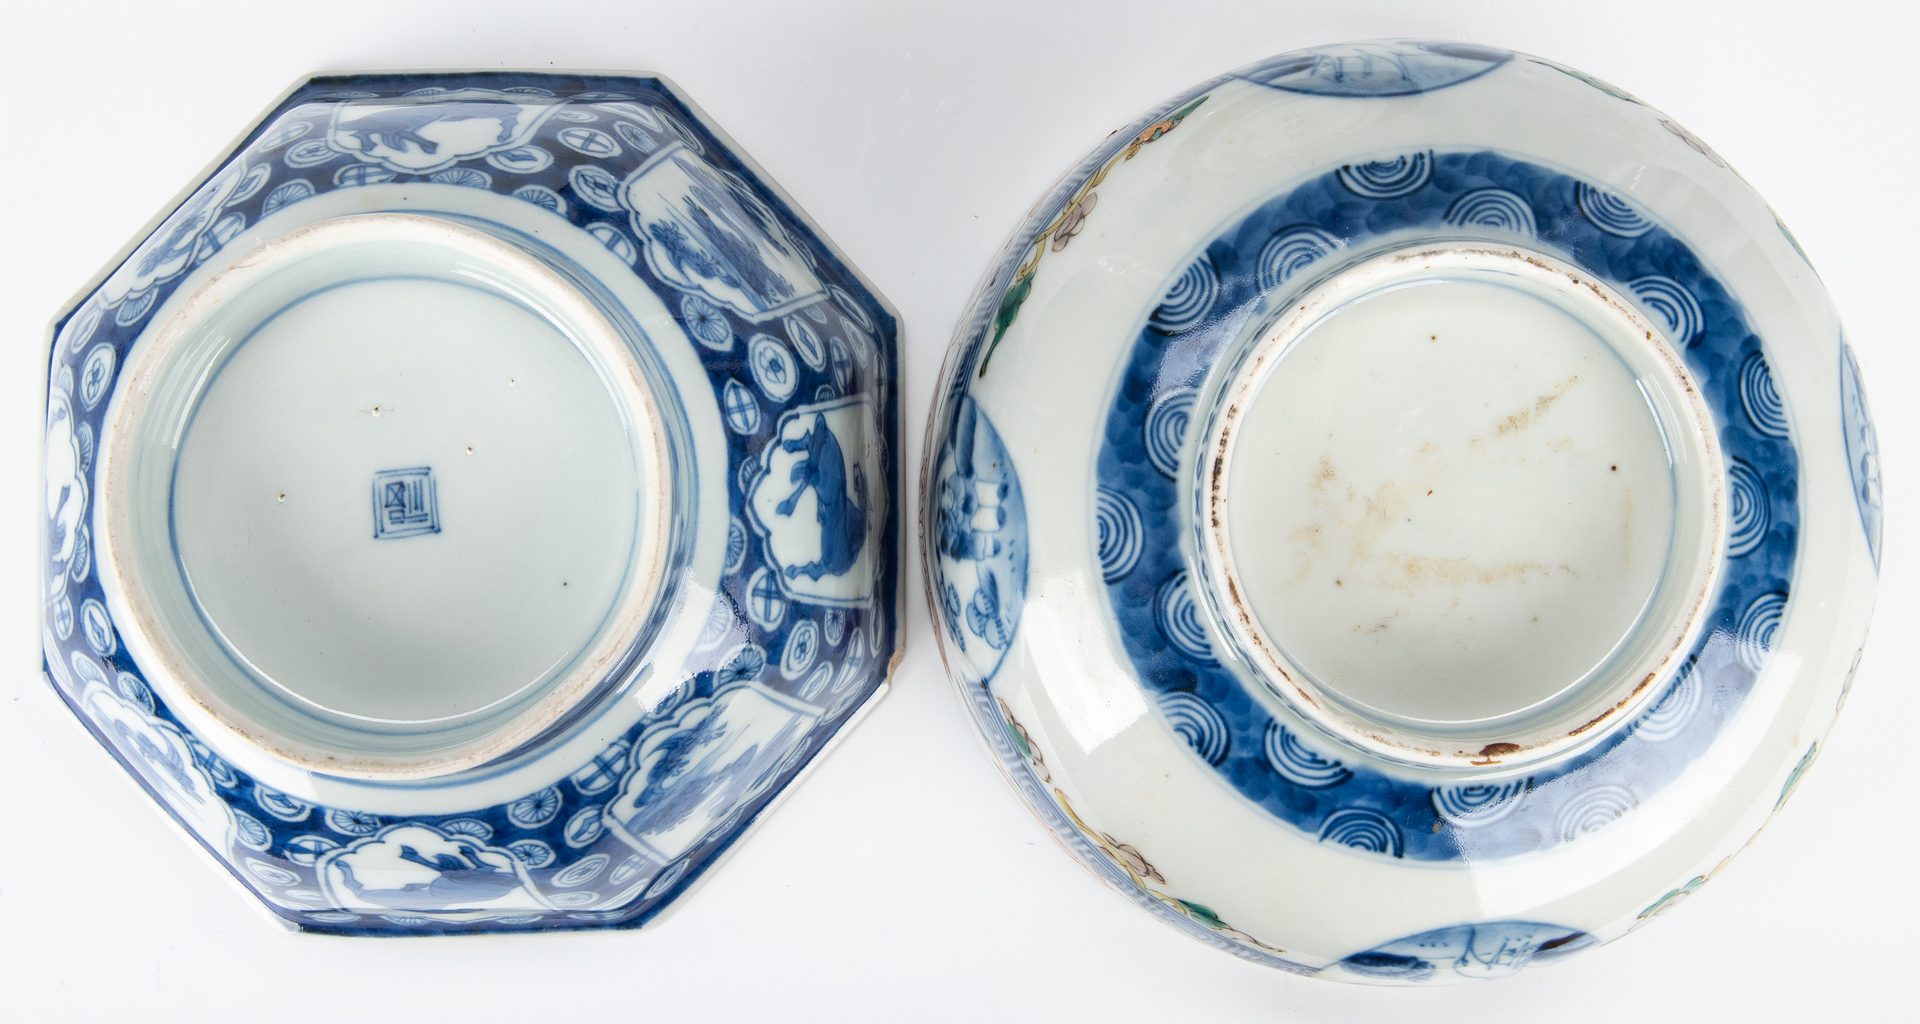 Lot 198: 6 Asian Porcelain Bowls & Plates, inc. Imari